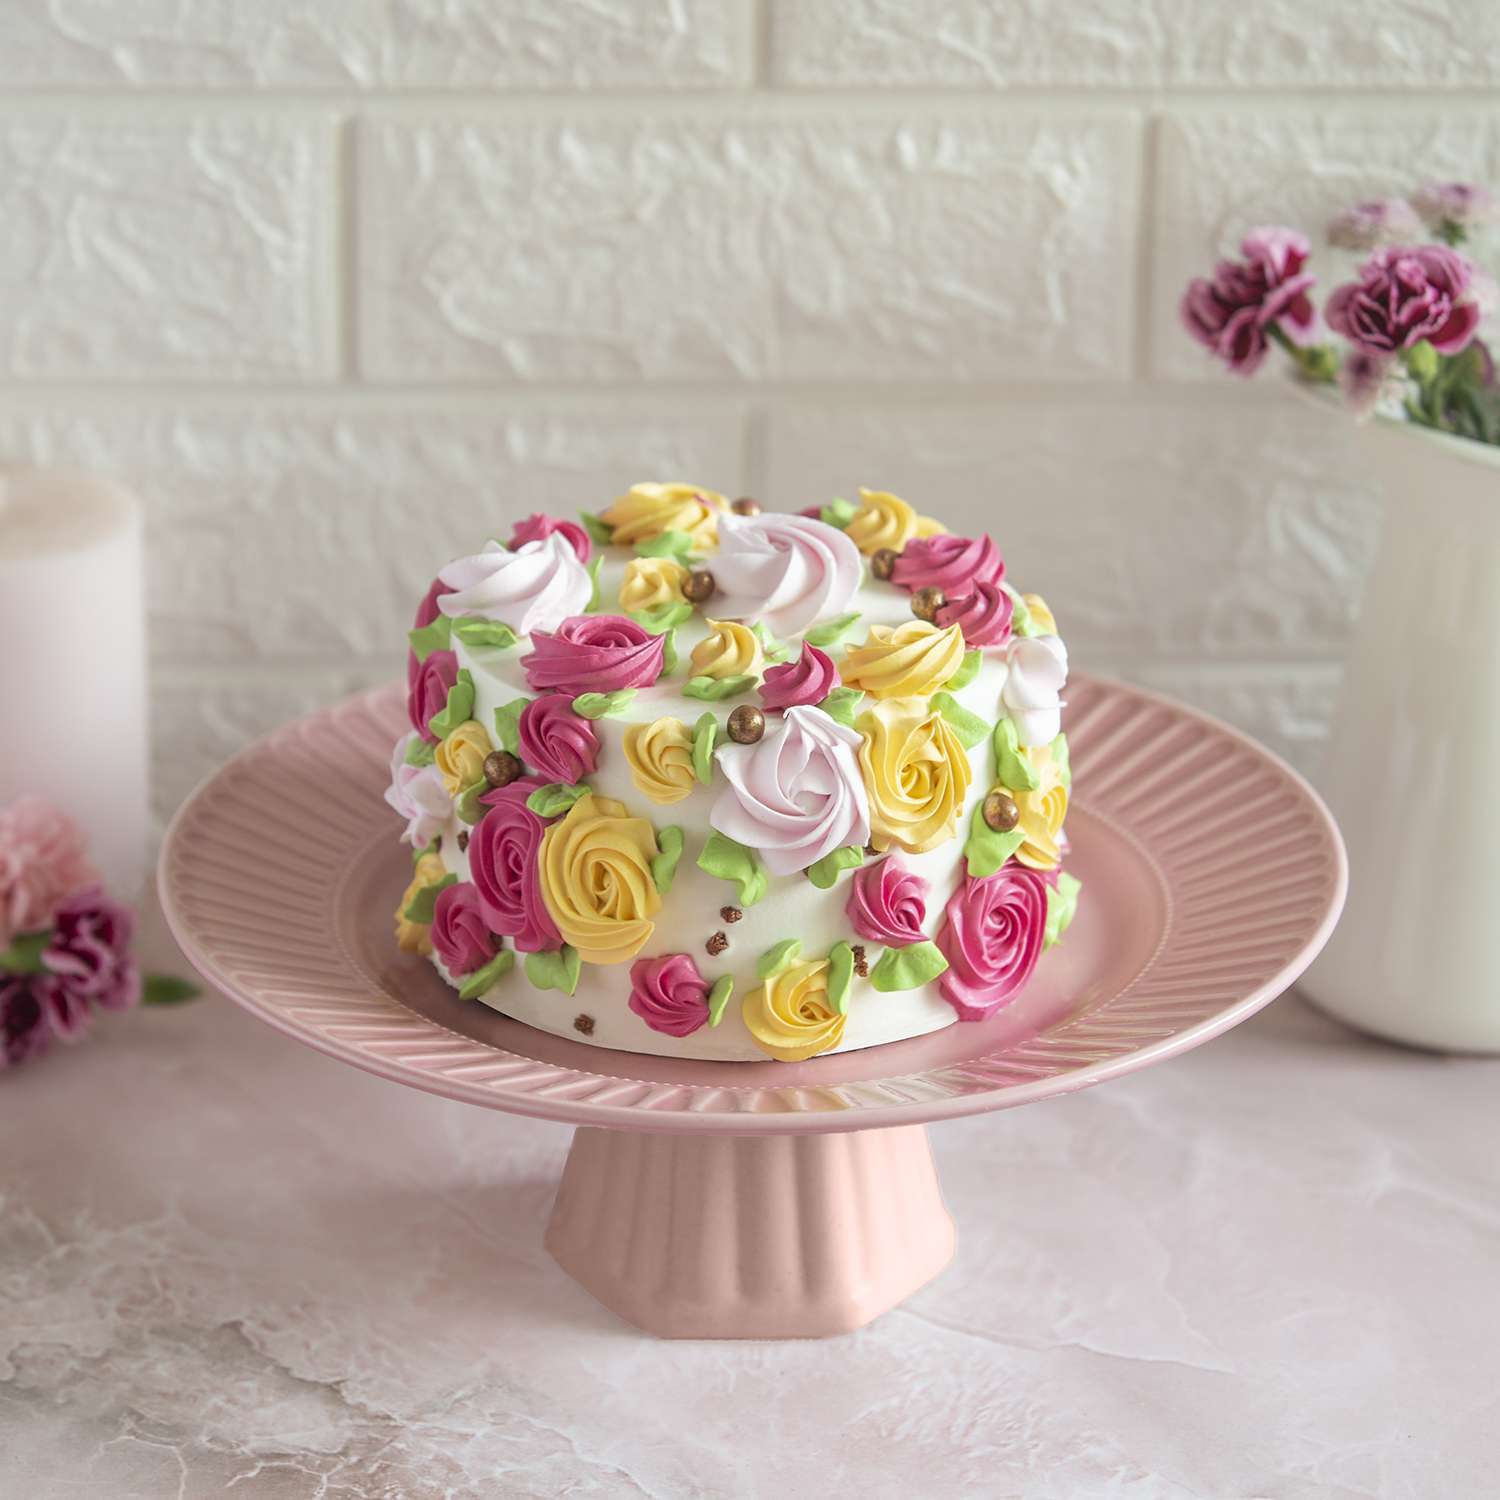 Cascading Floral Cake Tutorial - Sugar & Sparrow